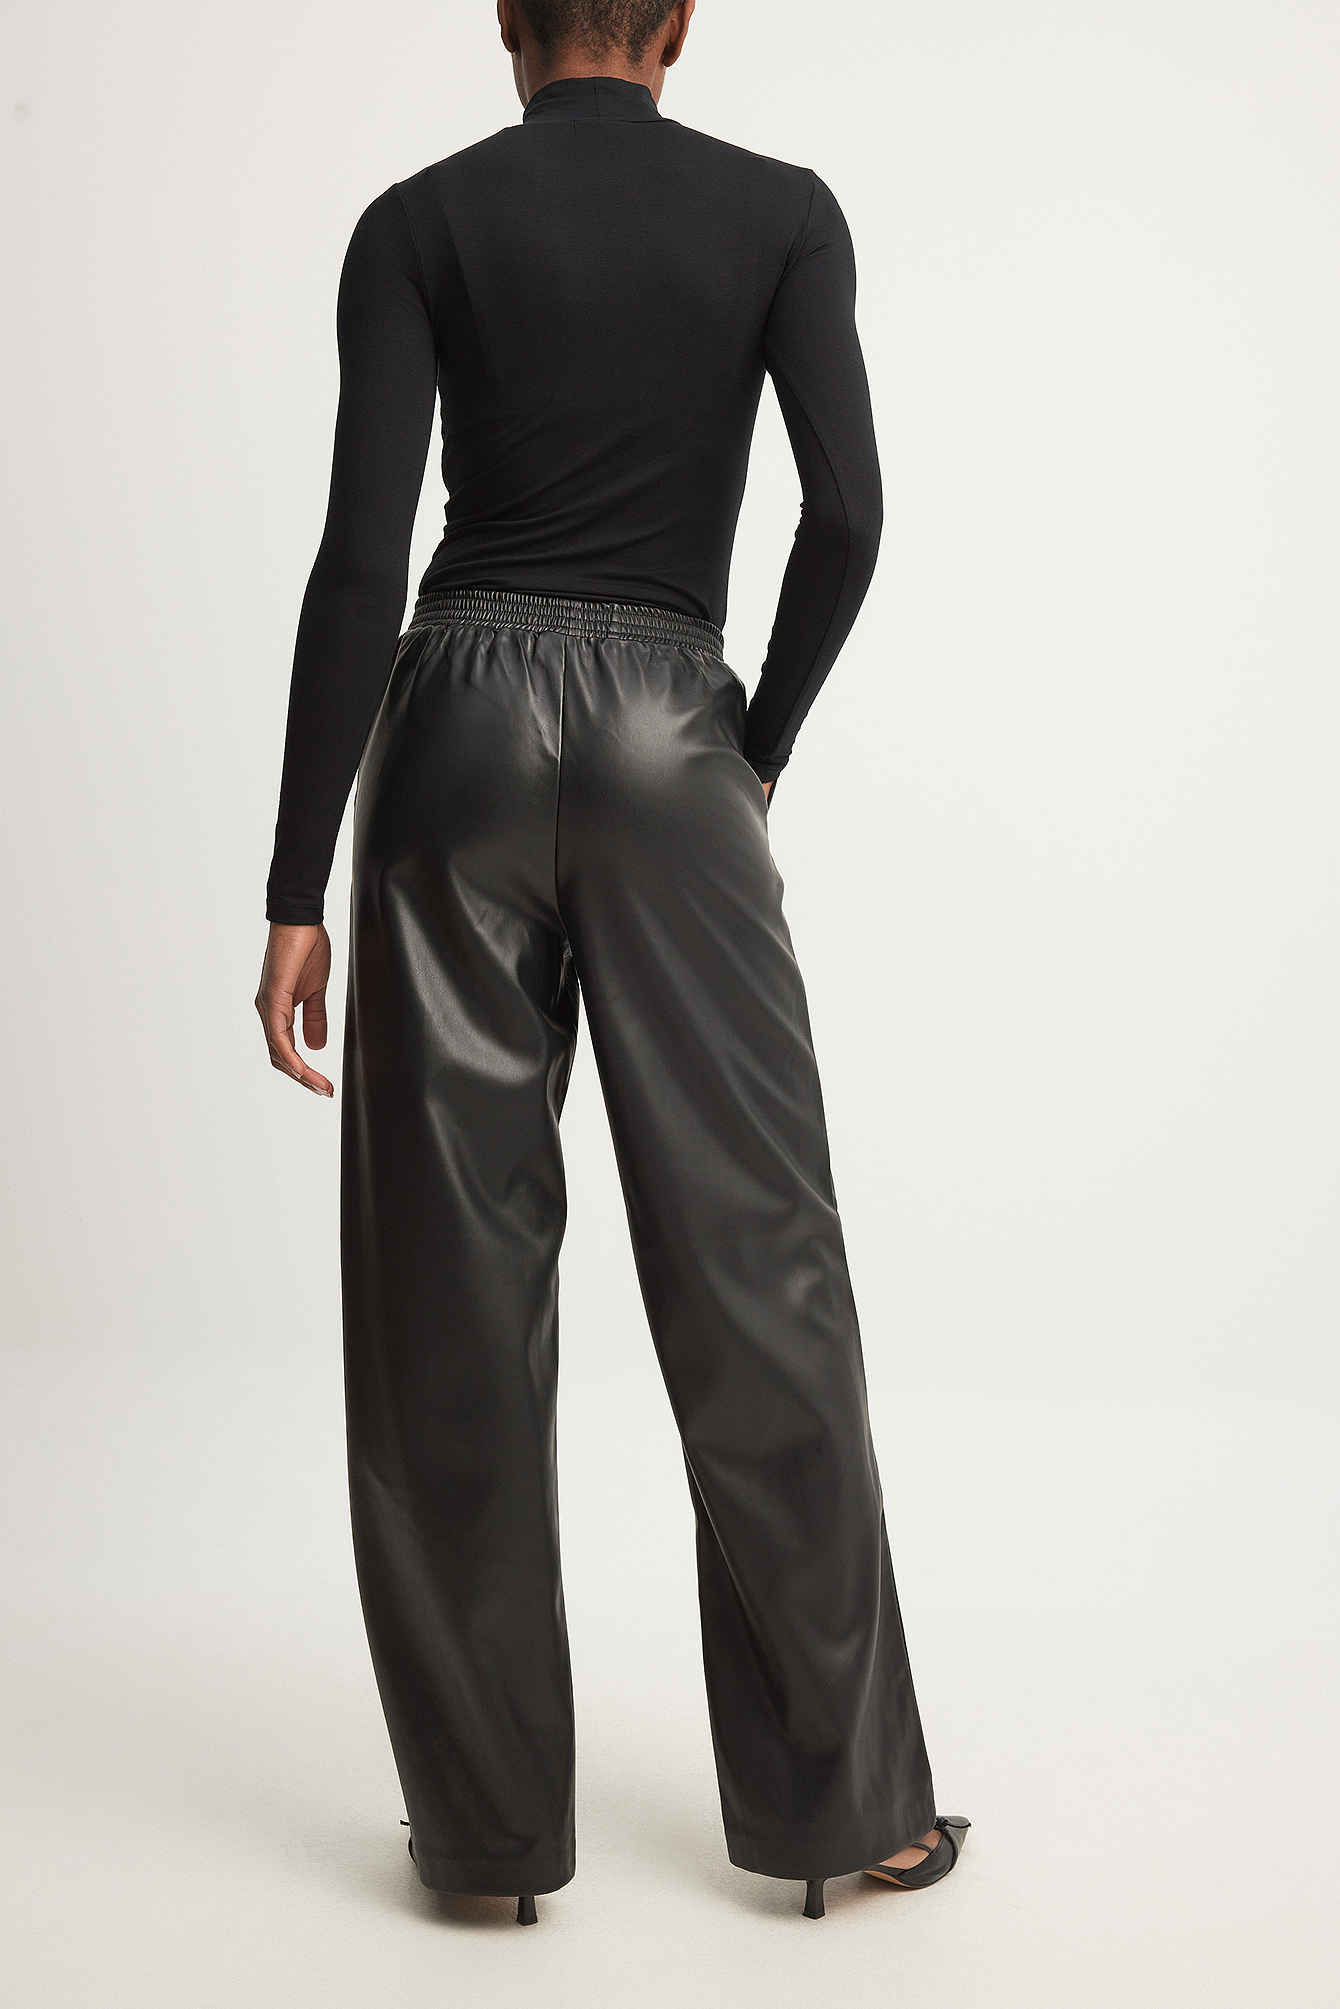 Zara Women's Faux Leather Drawstring Waist Straight Leg Pants